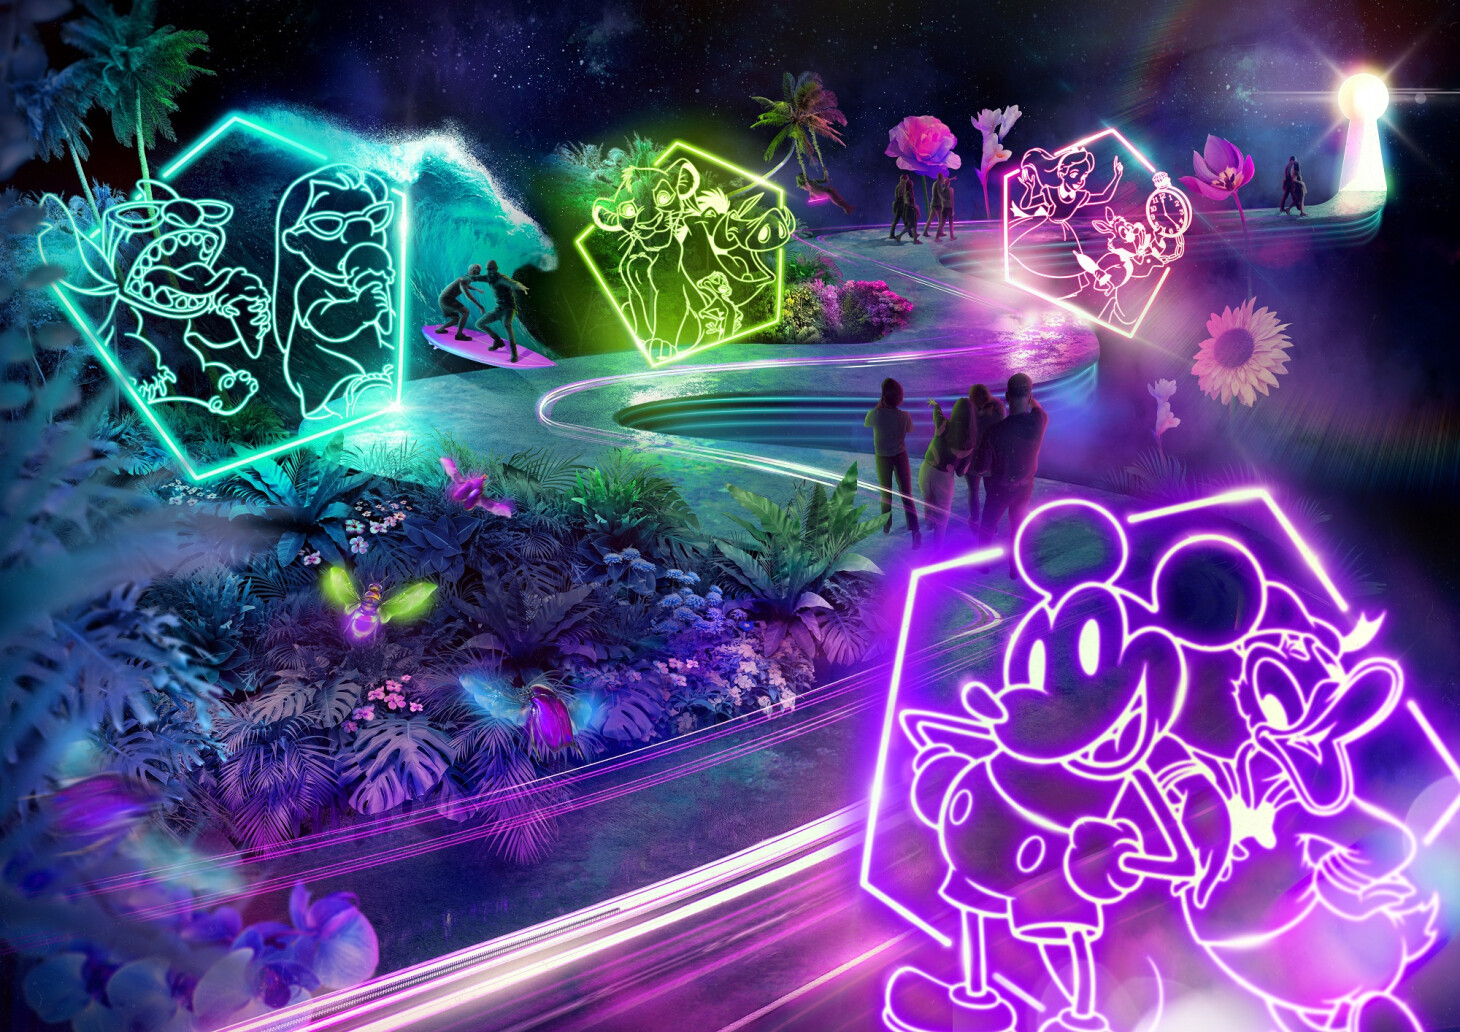 Unlock 'The Wonder of Friendship' at Disney's Immersive Experience!